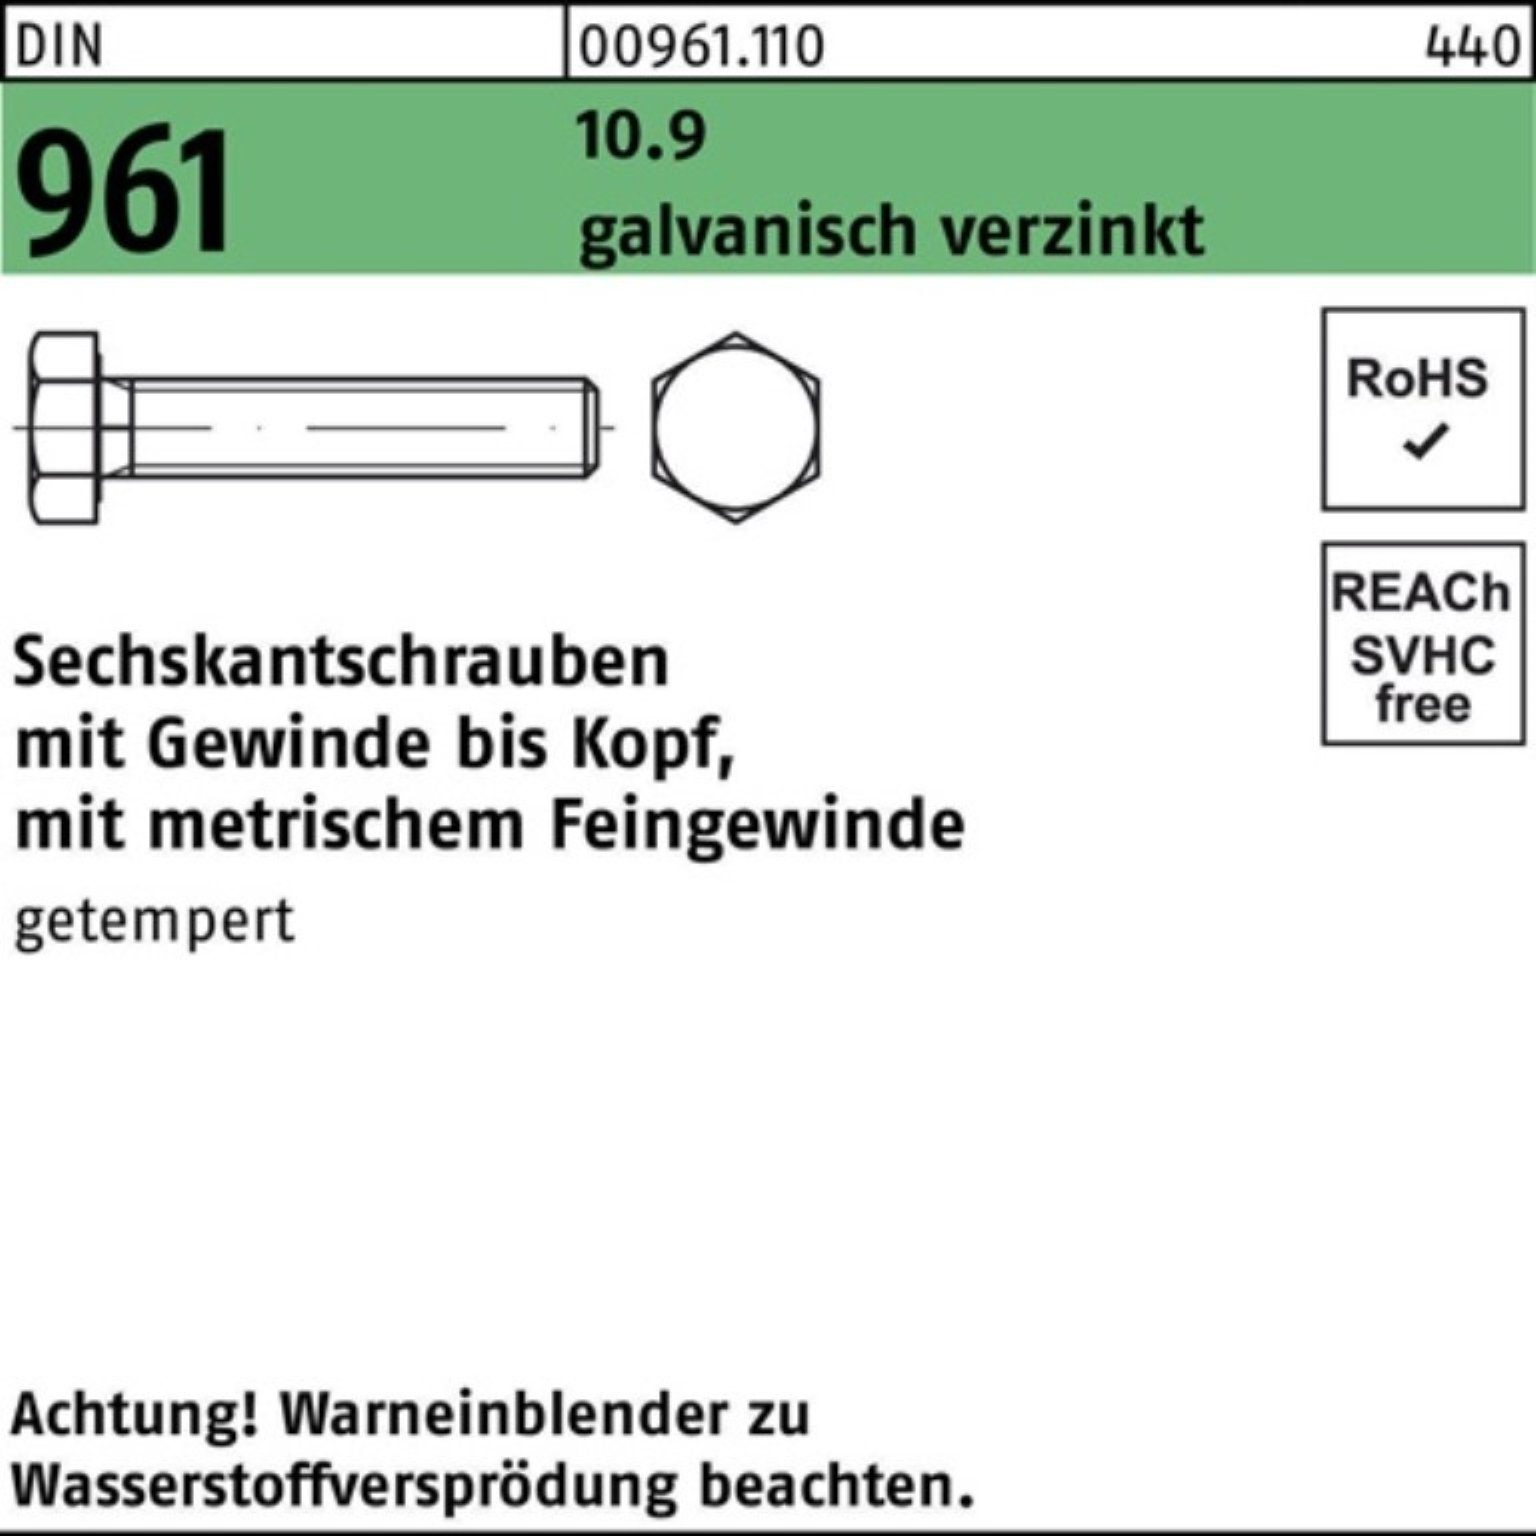 Pack 70 10.9 Reyher Sechskantschraube 961 VG 100er DIN Sechskantschraube M12x1,5x 10 galv.verz.